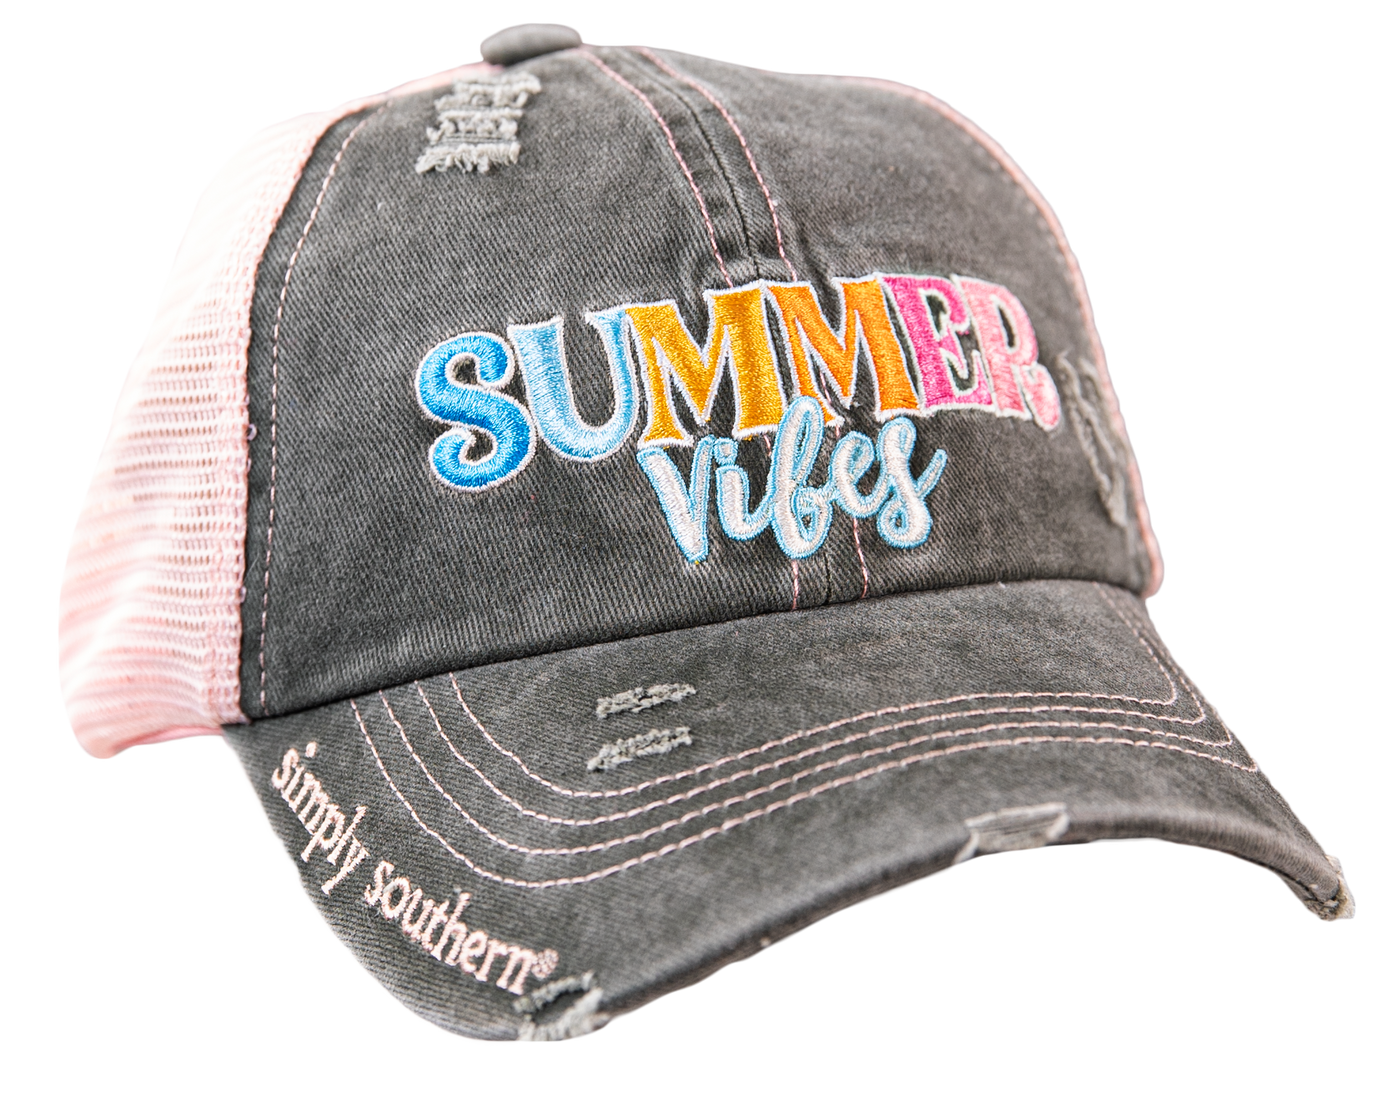 * Simply Southern Lake Trucker Hat